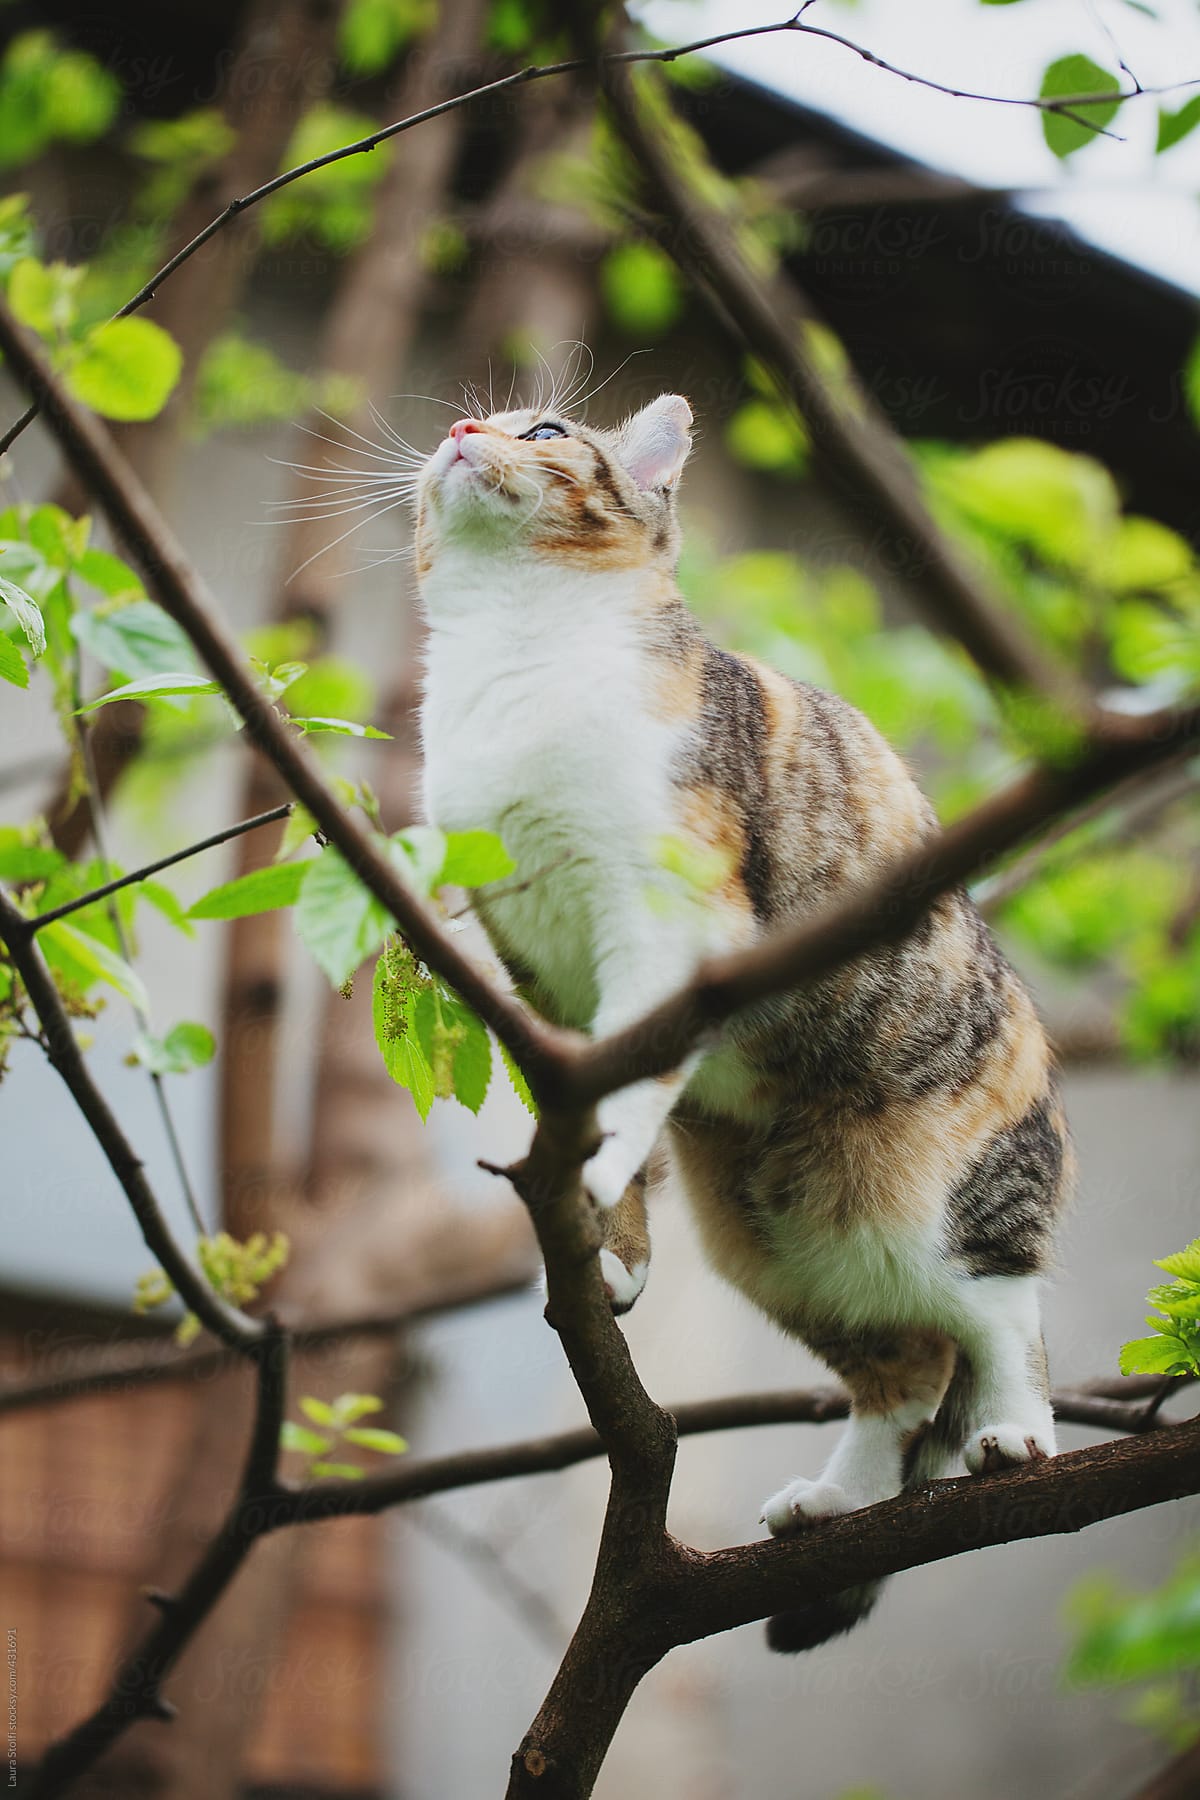 Tabby cat climbing tree and looking up by Laura Stolfi - Stocksy United